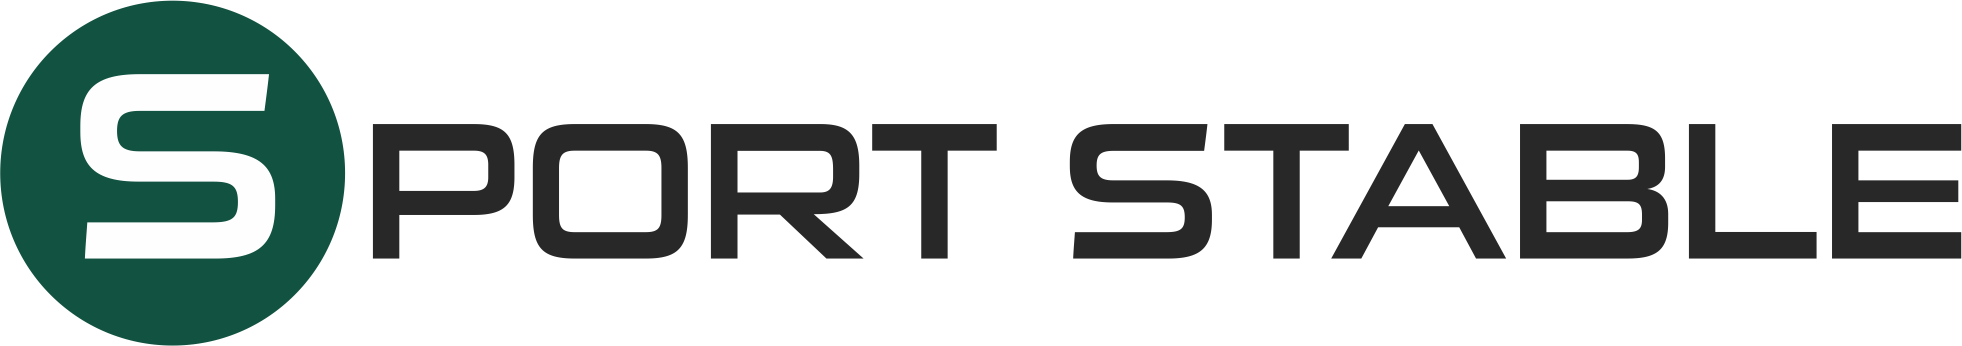 sport stable logo